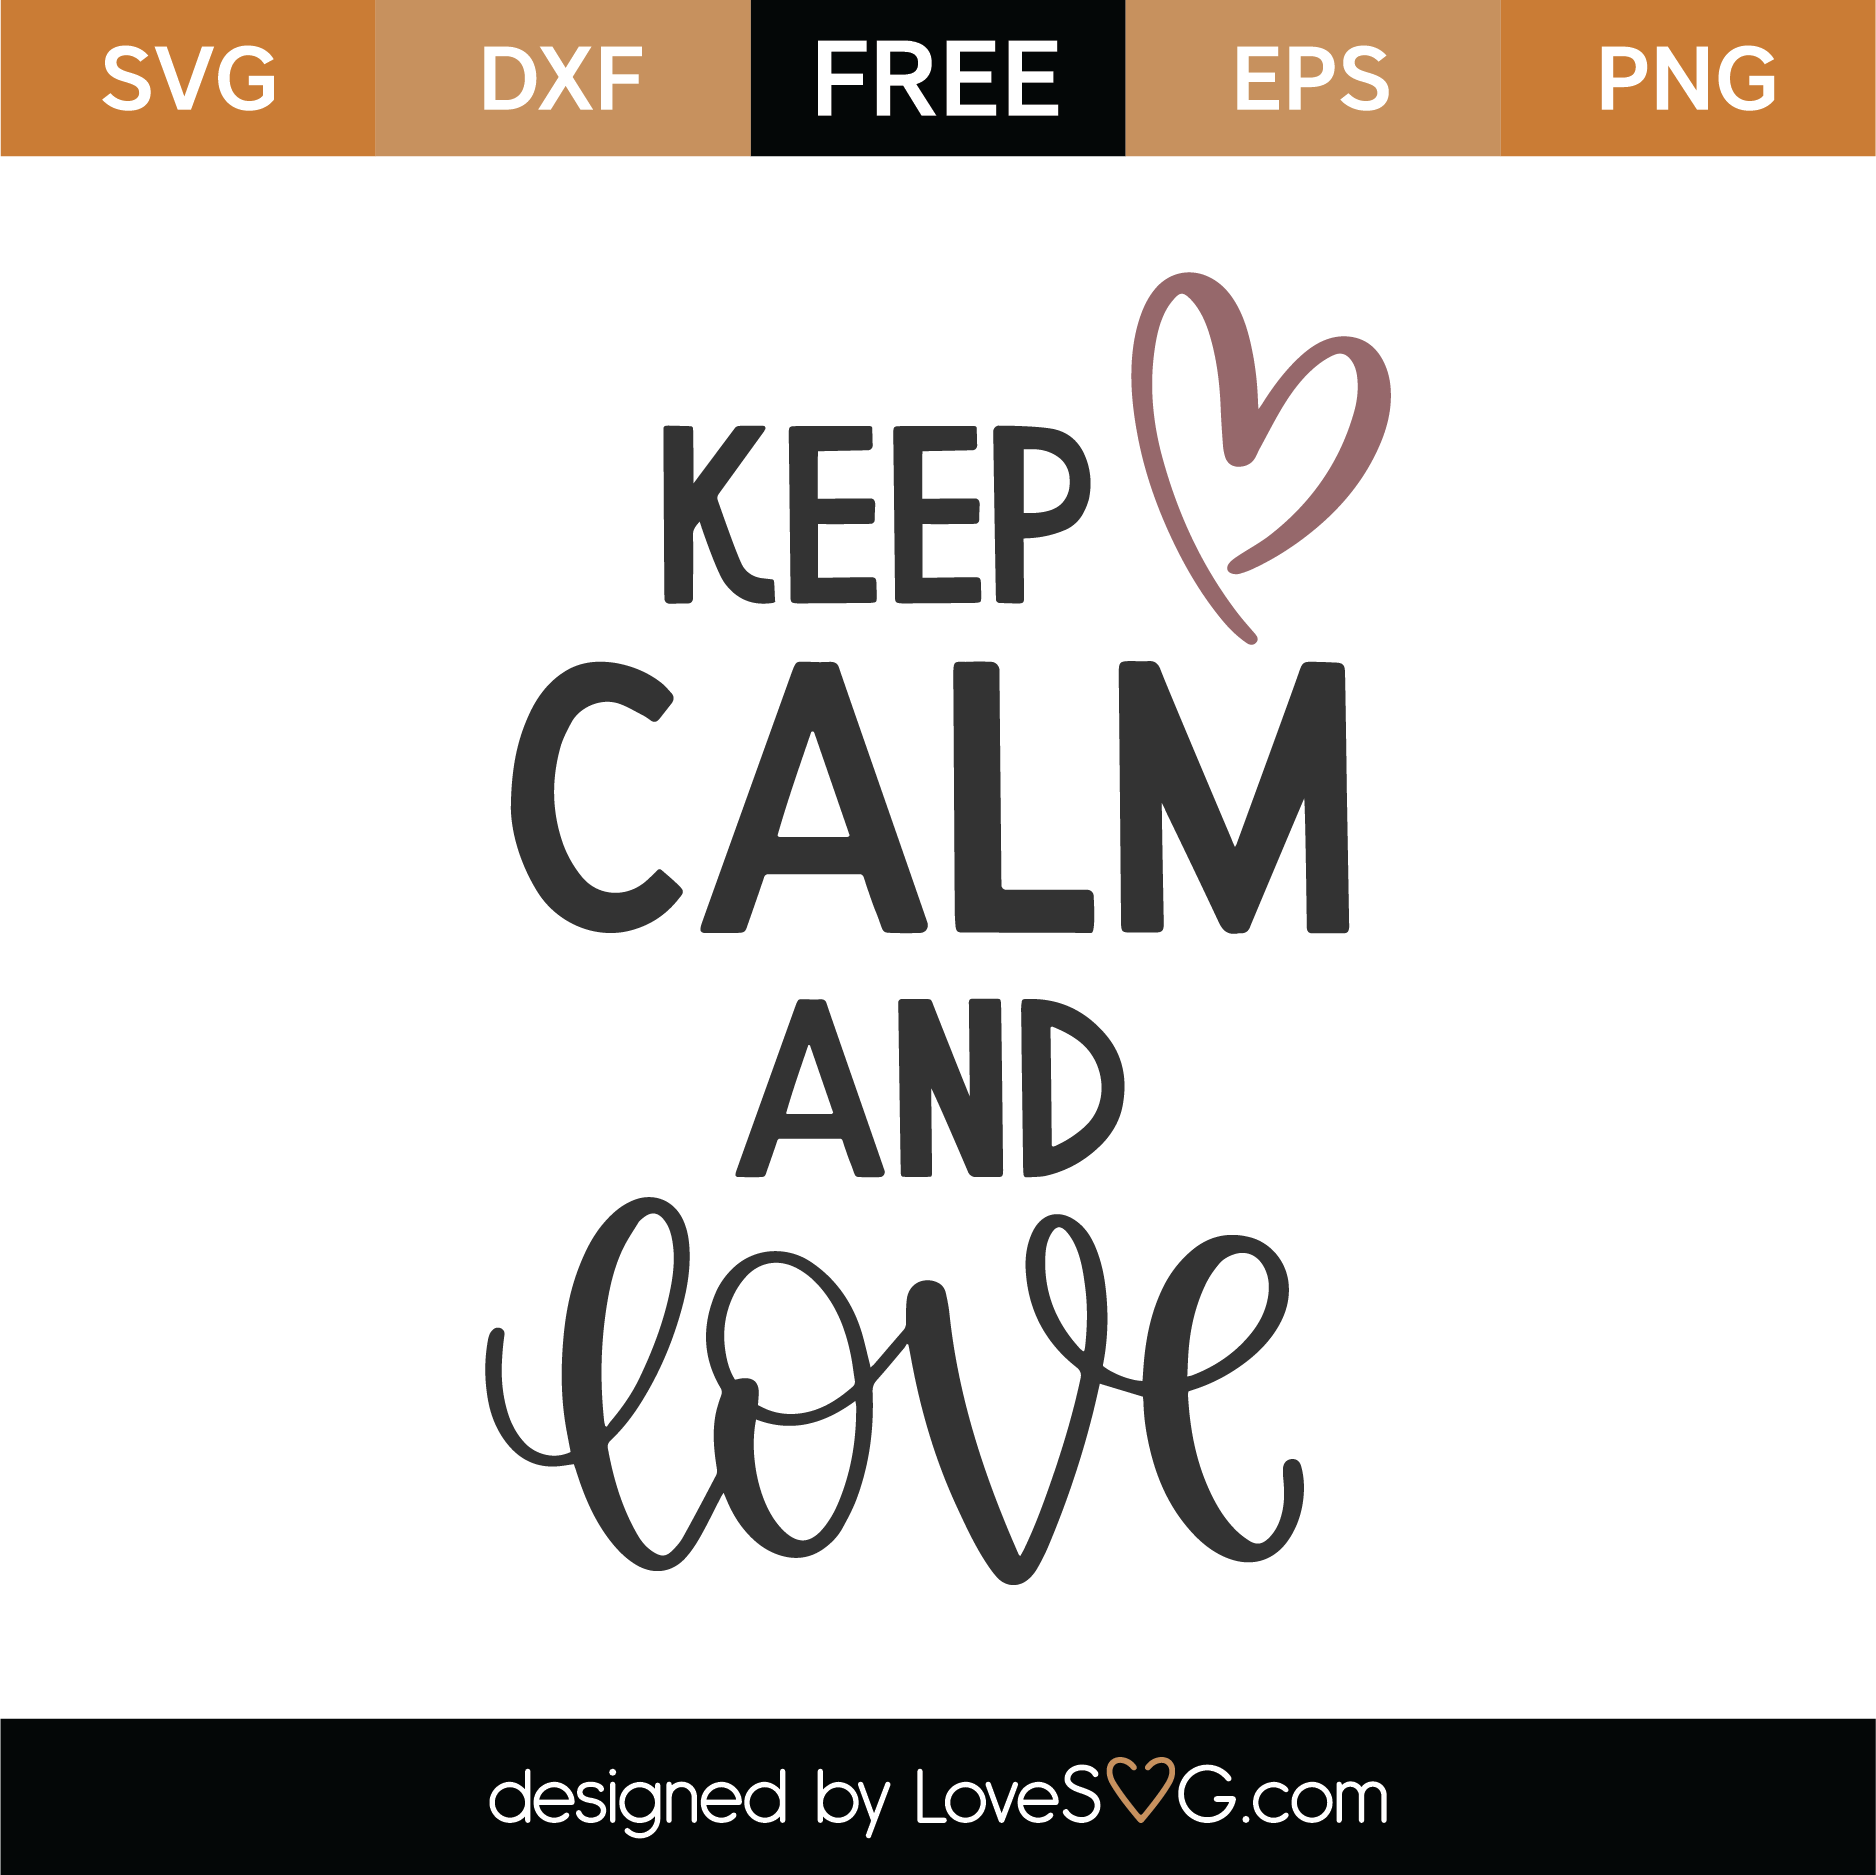 Download Free Keep Calm and Love SVG Cut File | Lovesvg.com